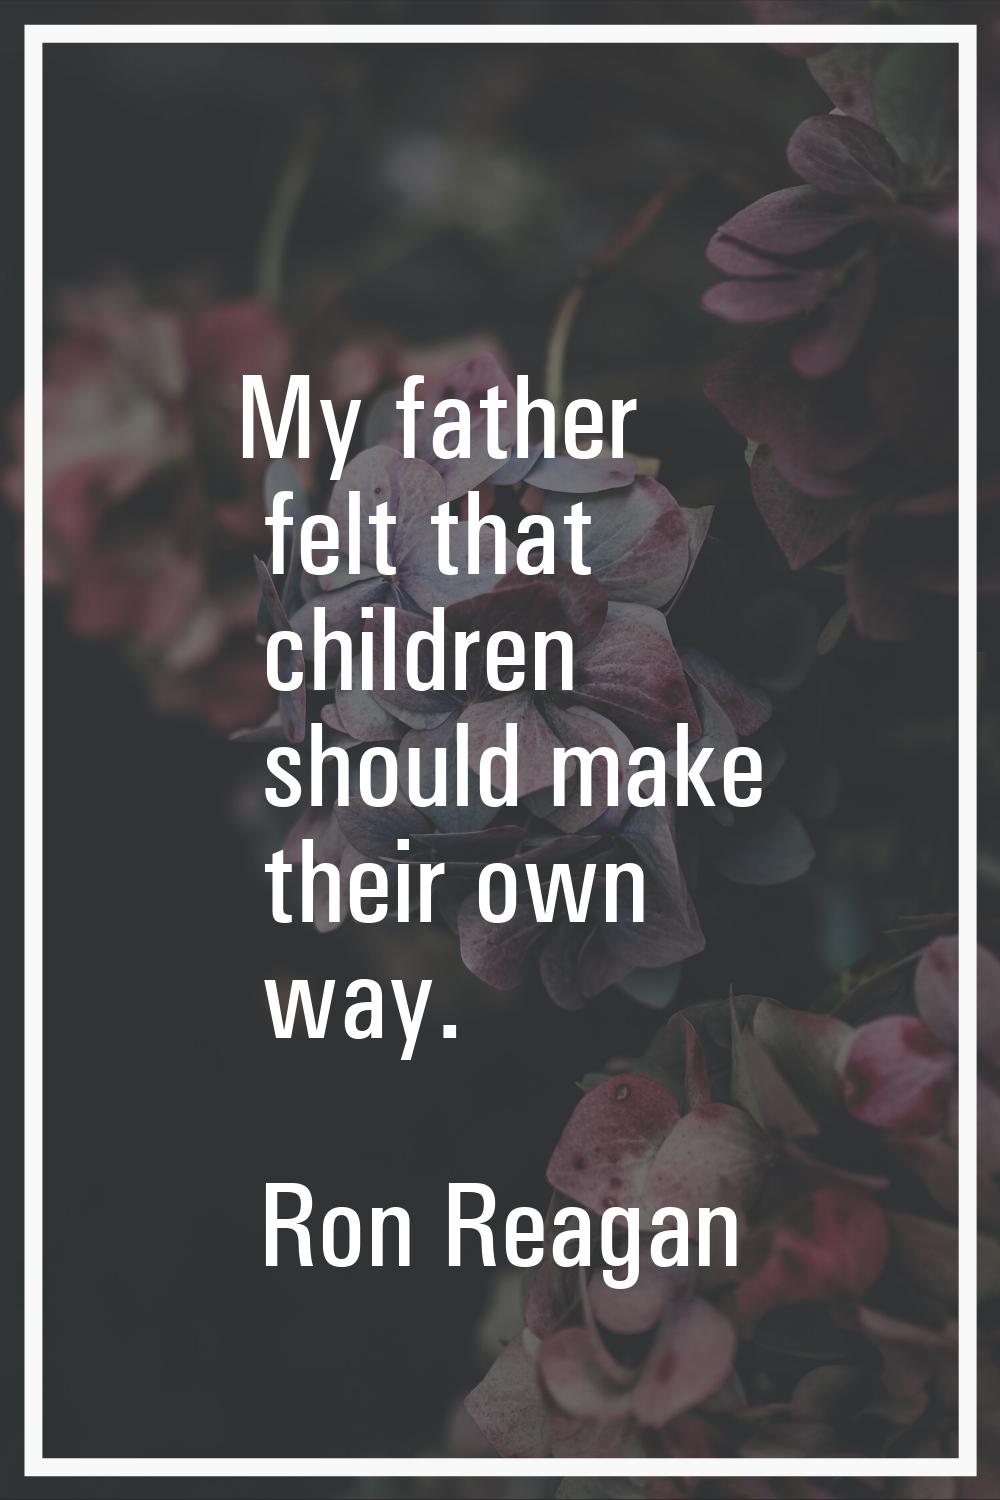 My father felt that children should make their own way.